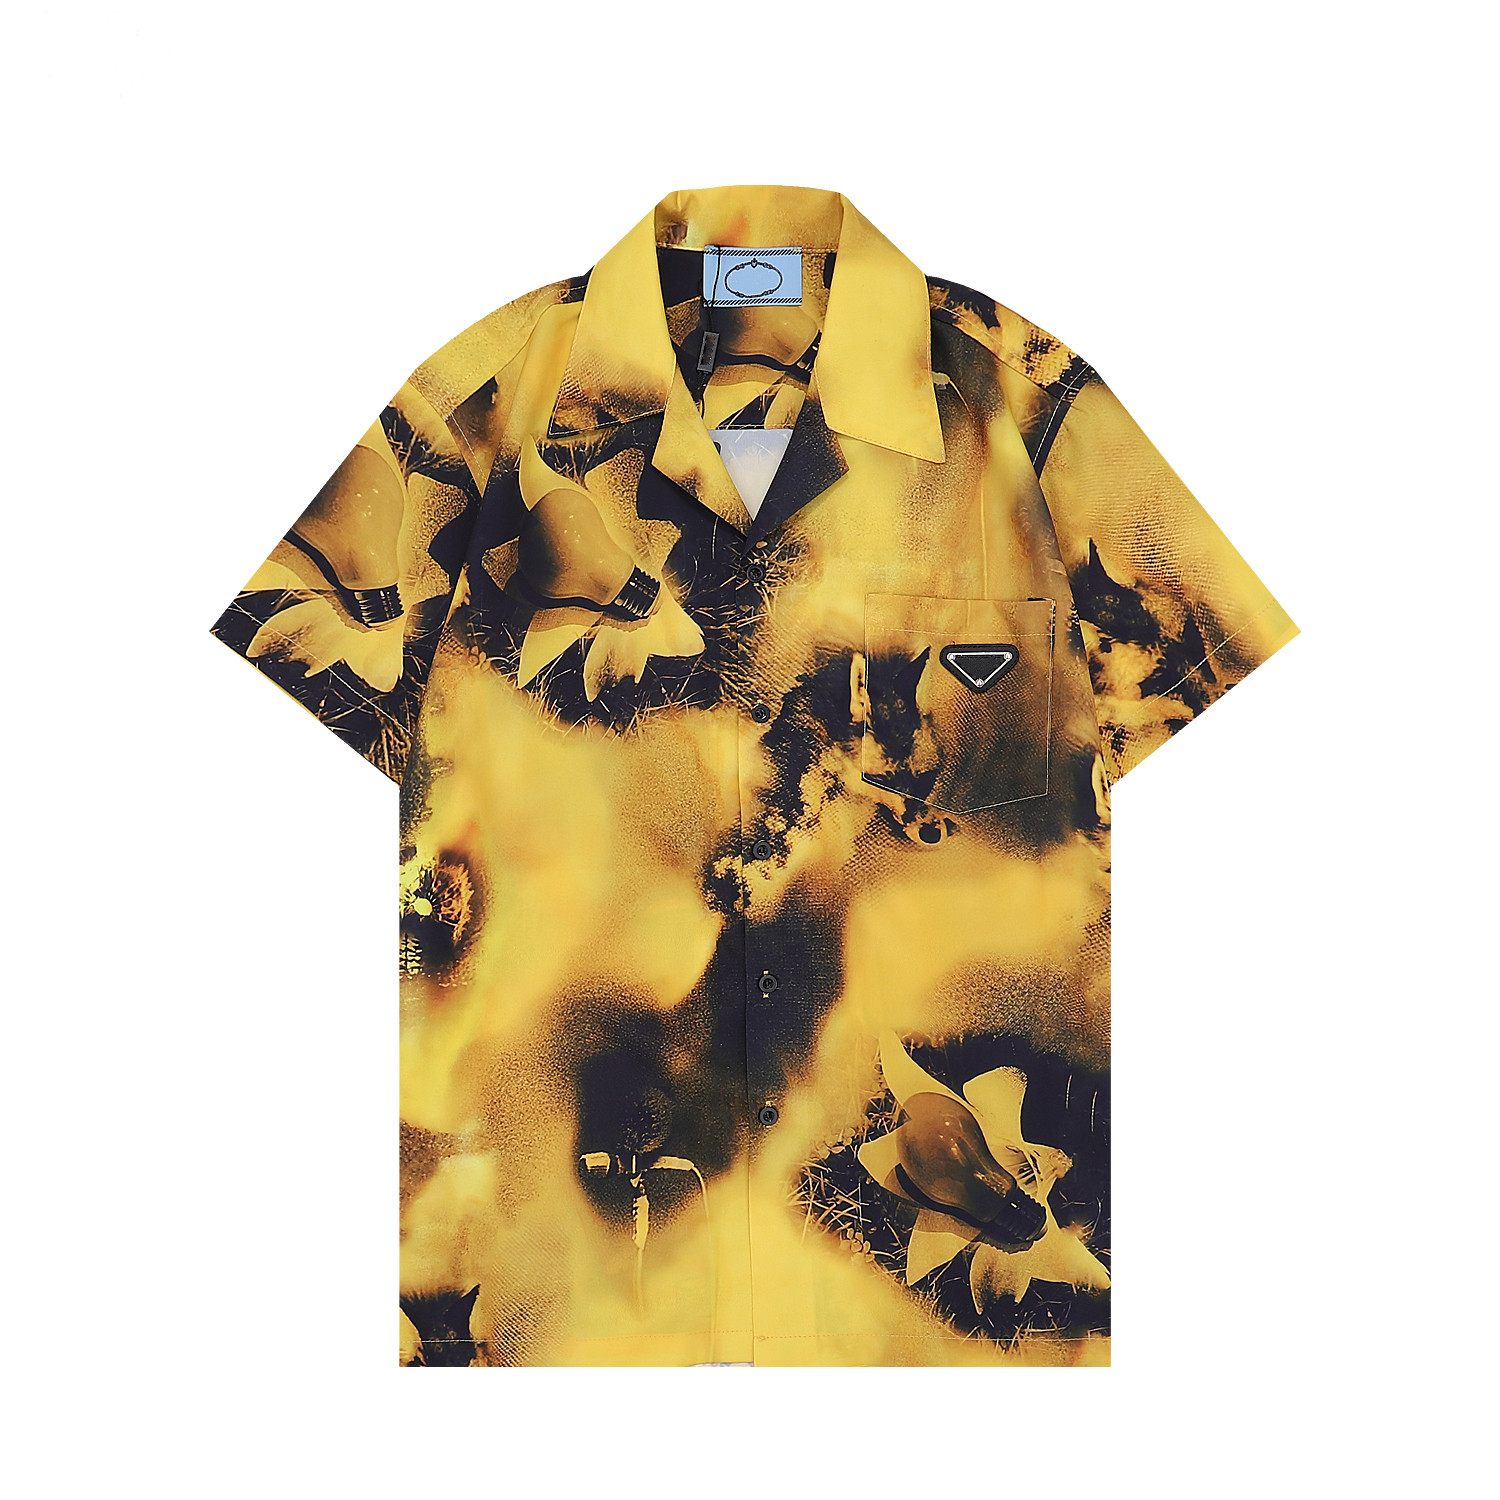 

New Spring Summer Bowling Shirts Mens Fashion Couture Gold Baroque Print Shirts Casual Button Down Short Sleeve Hawaiian Shirt Suits Beach Designer Dress Shirts, As picture show